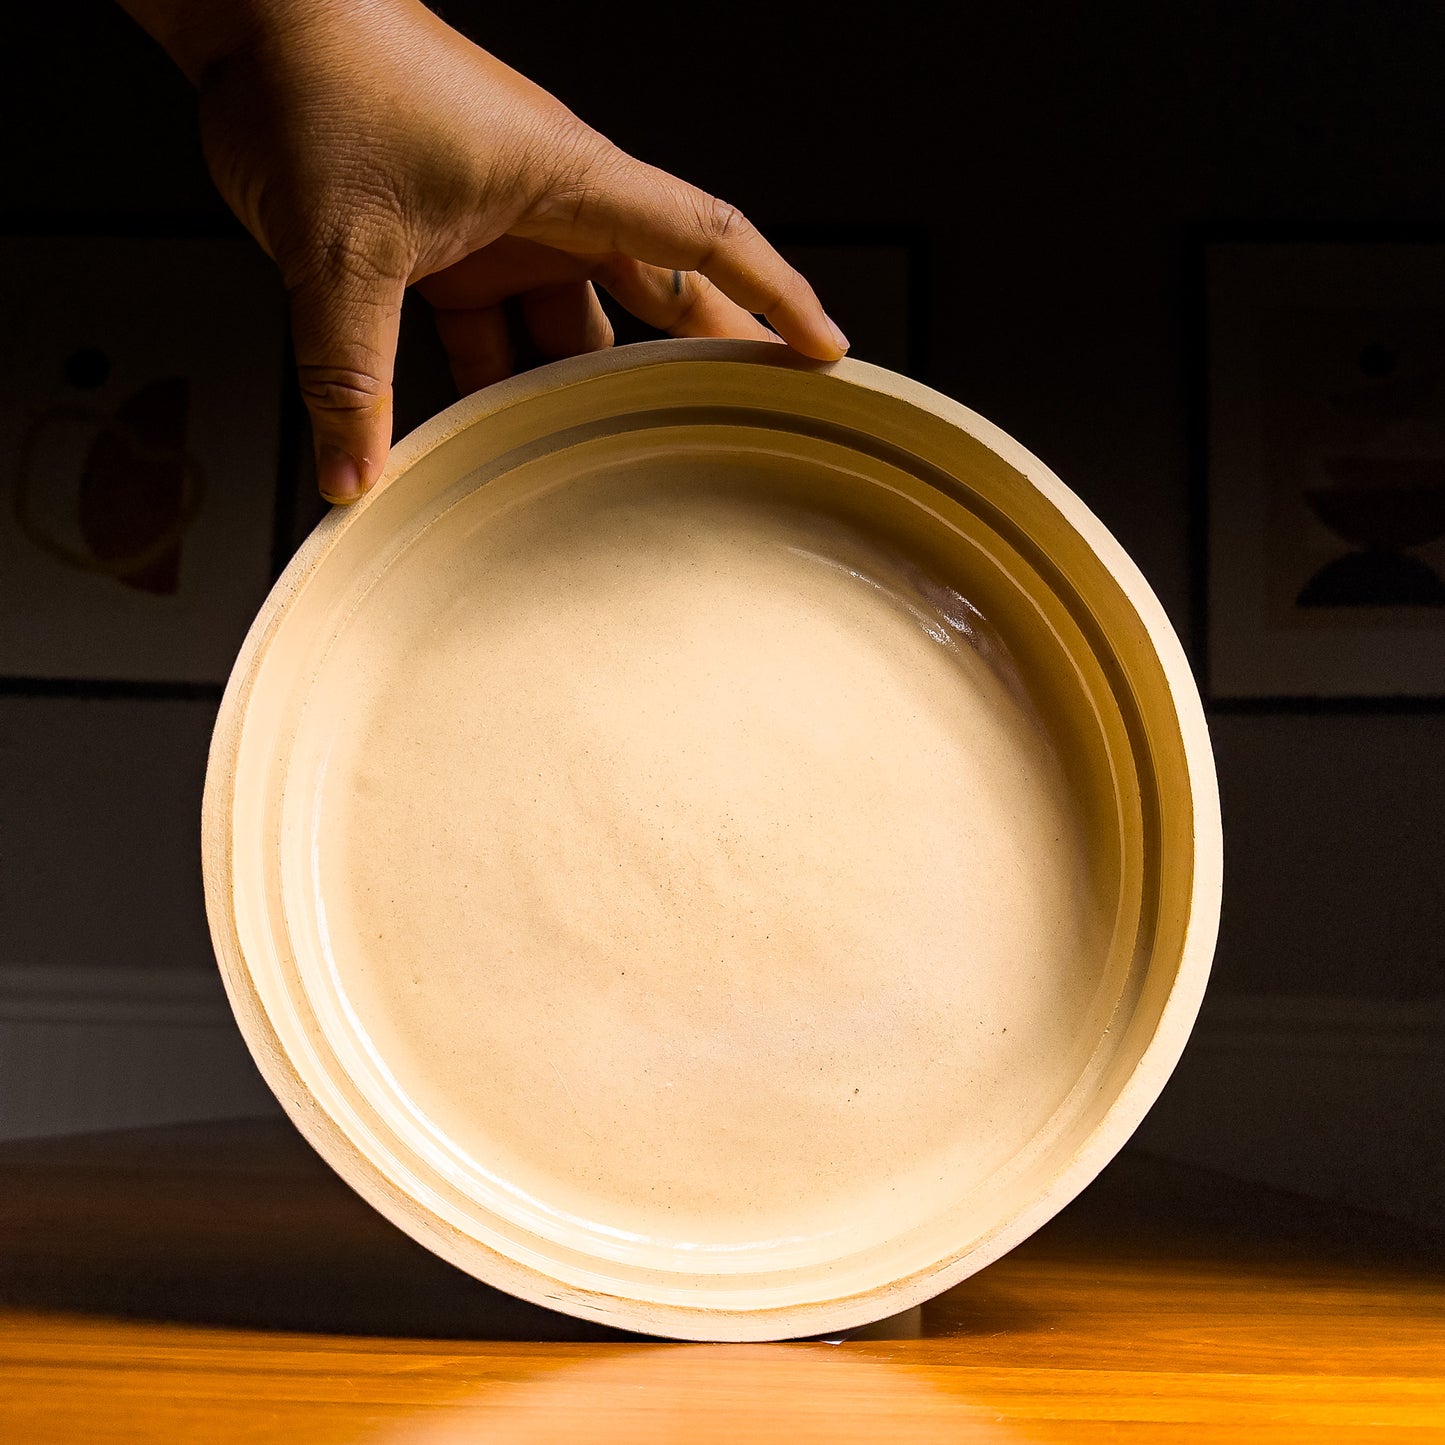 Serving Platter (Made to Order)